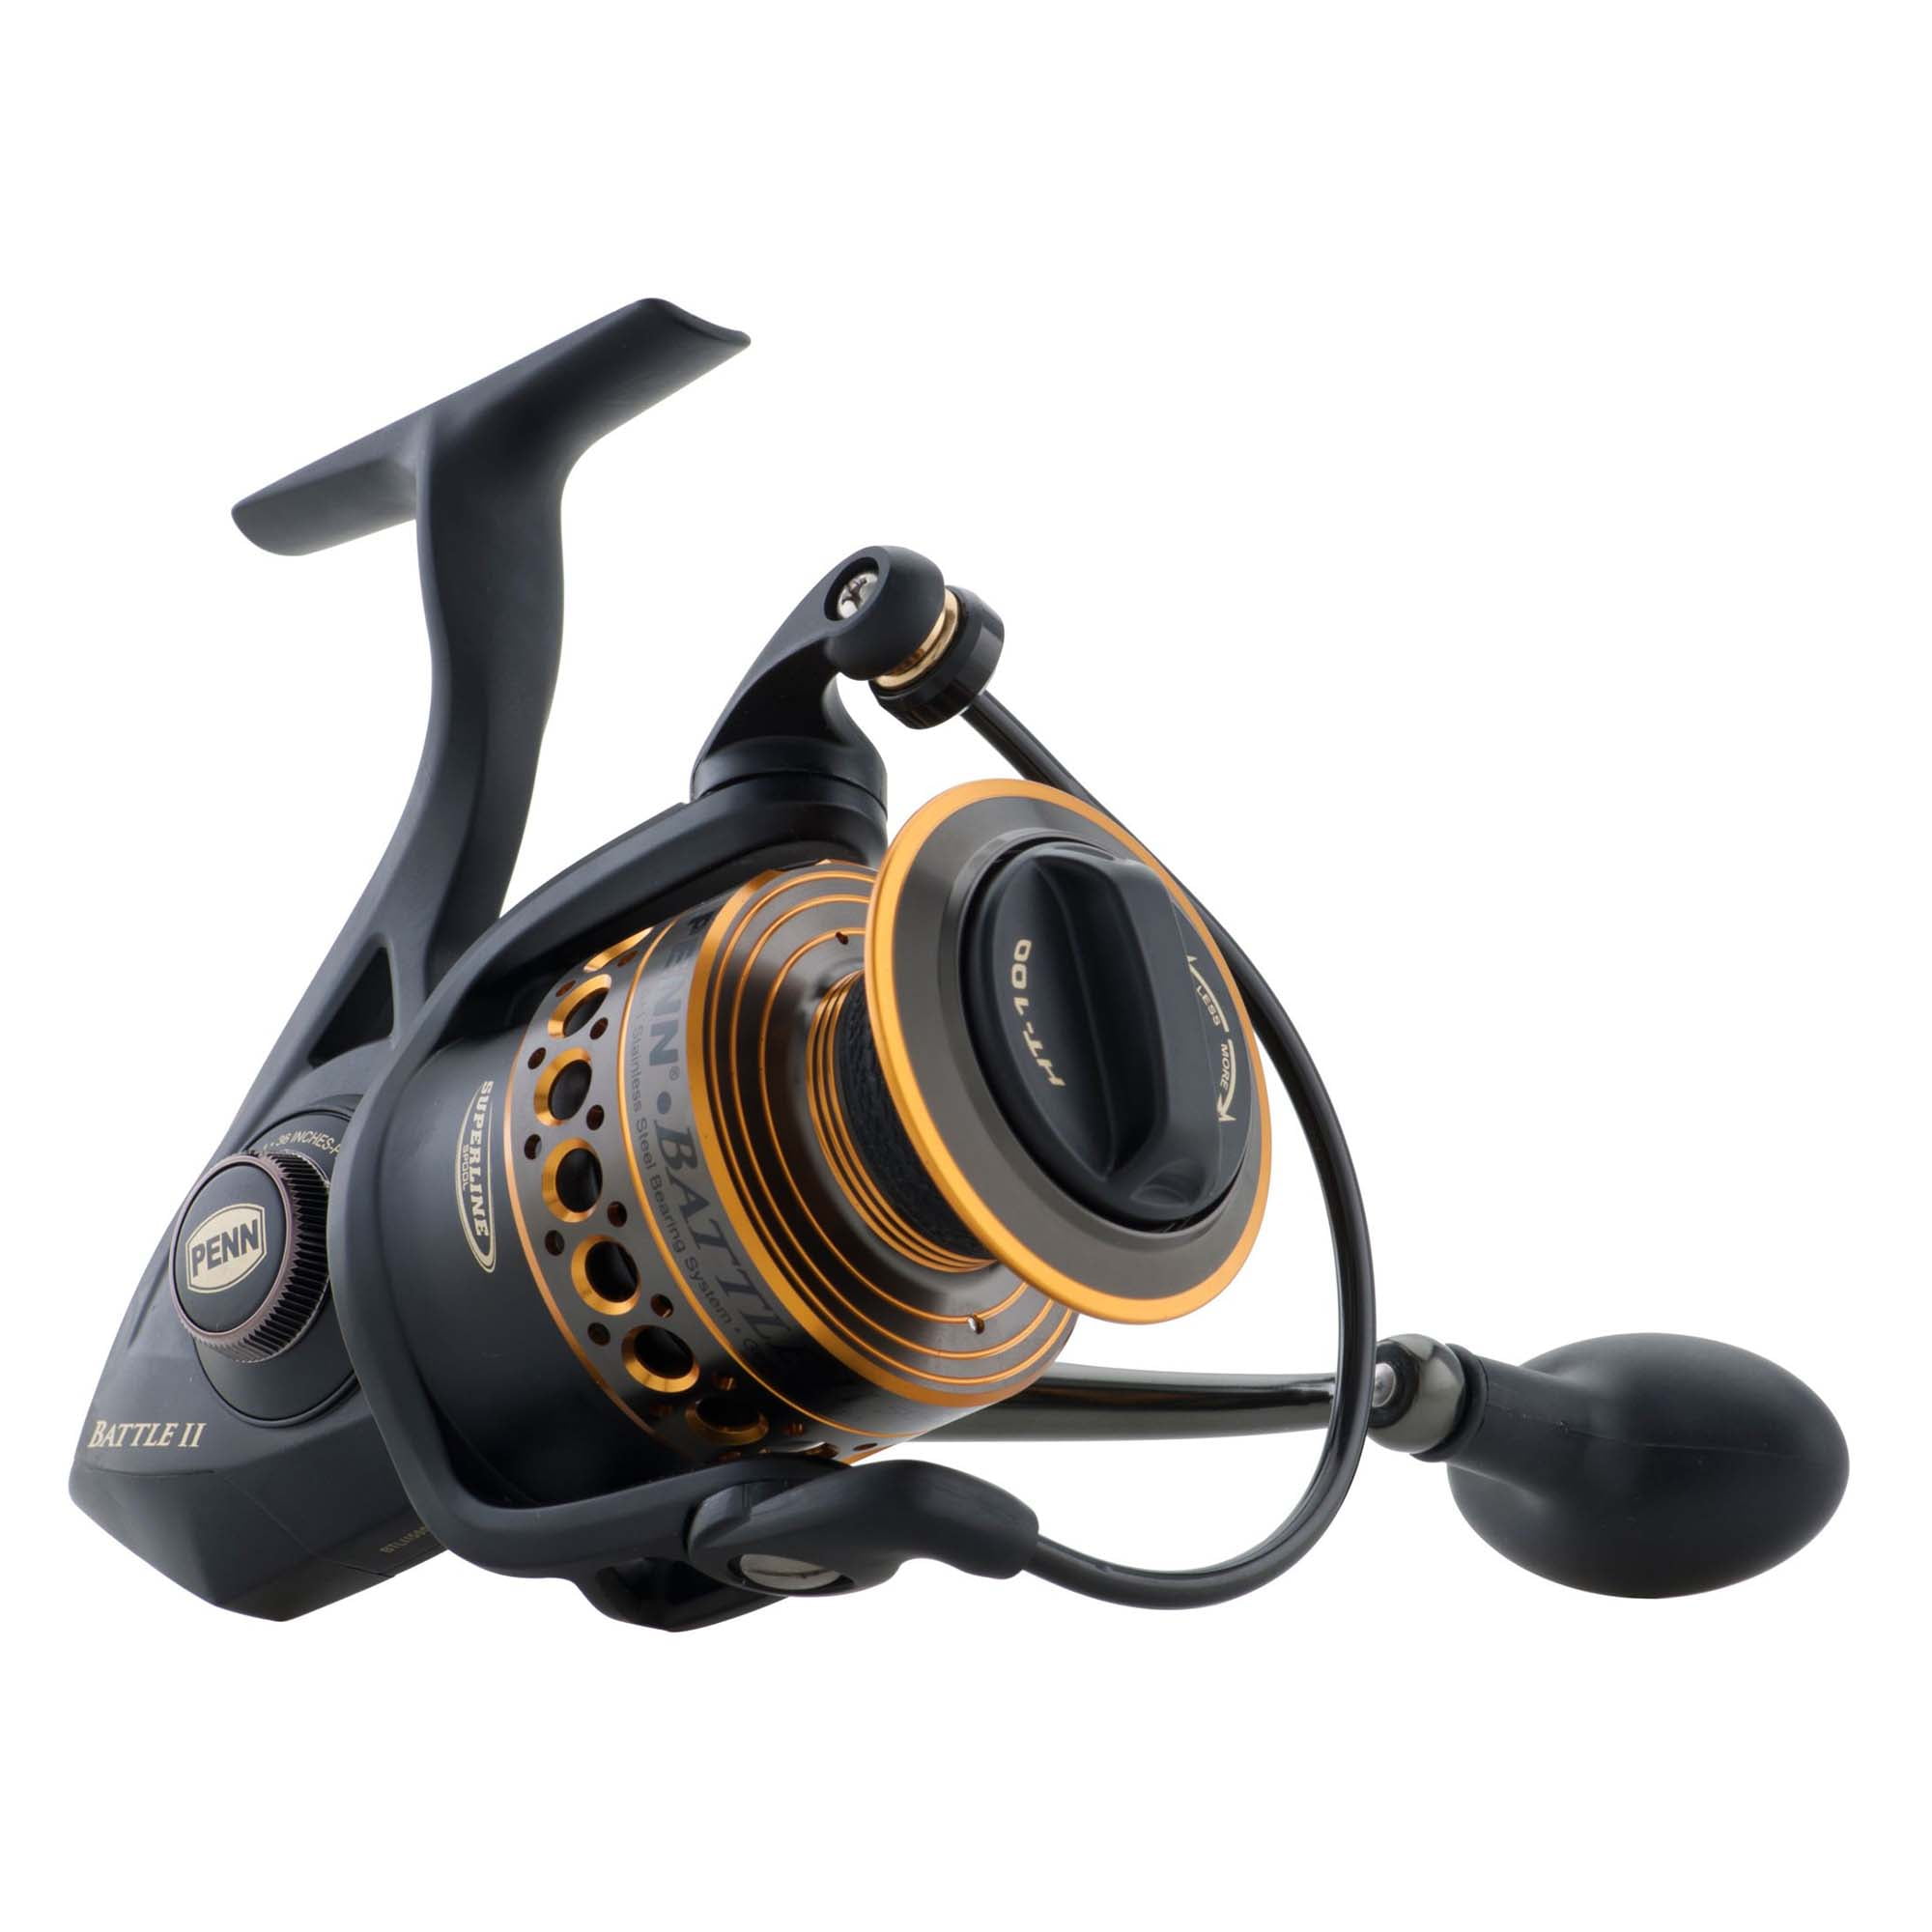 PENN Battle II Spinning Inshore Fishing Reel, Size 6000 (BTLII6000)